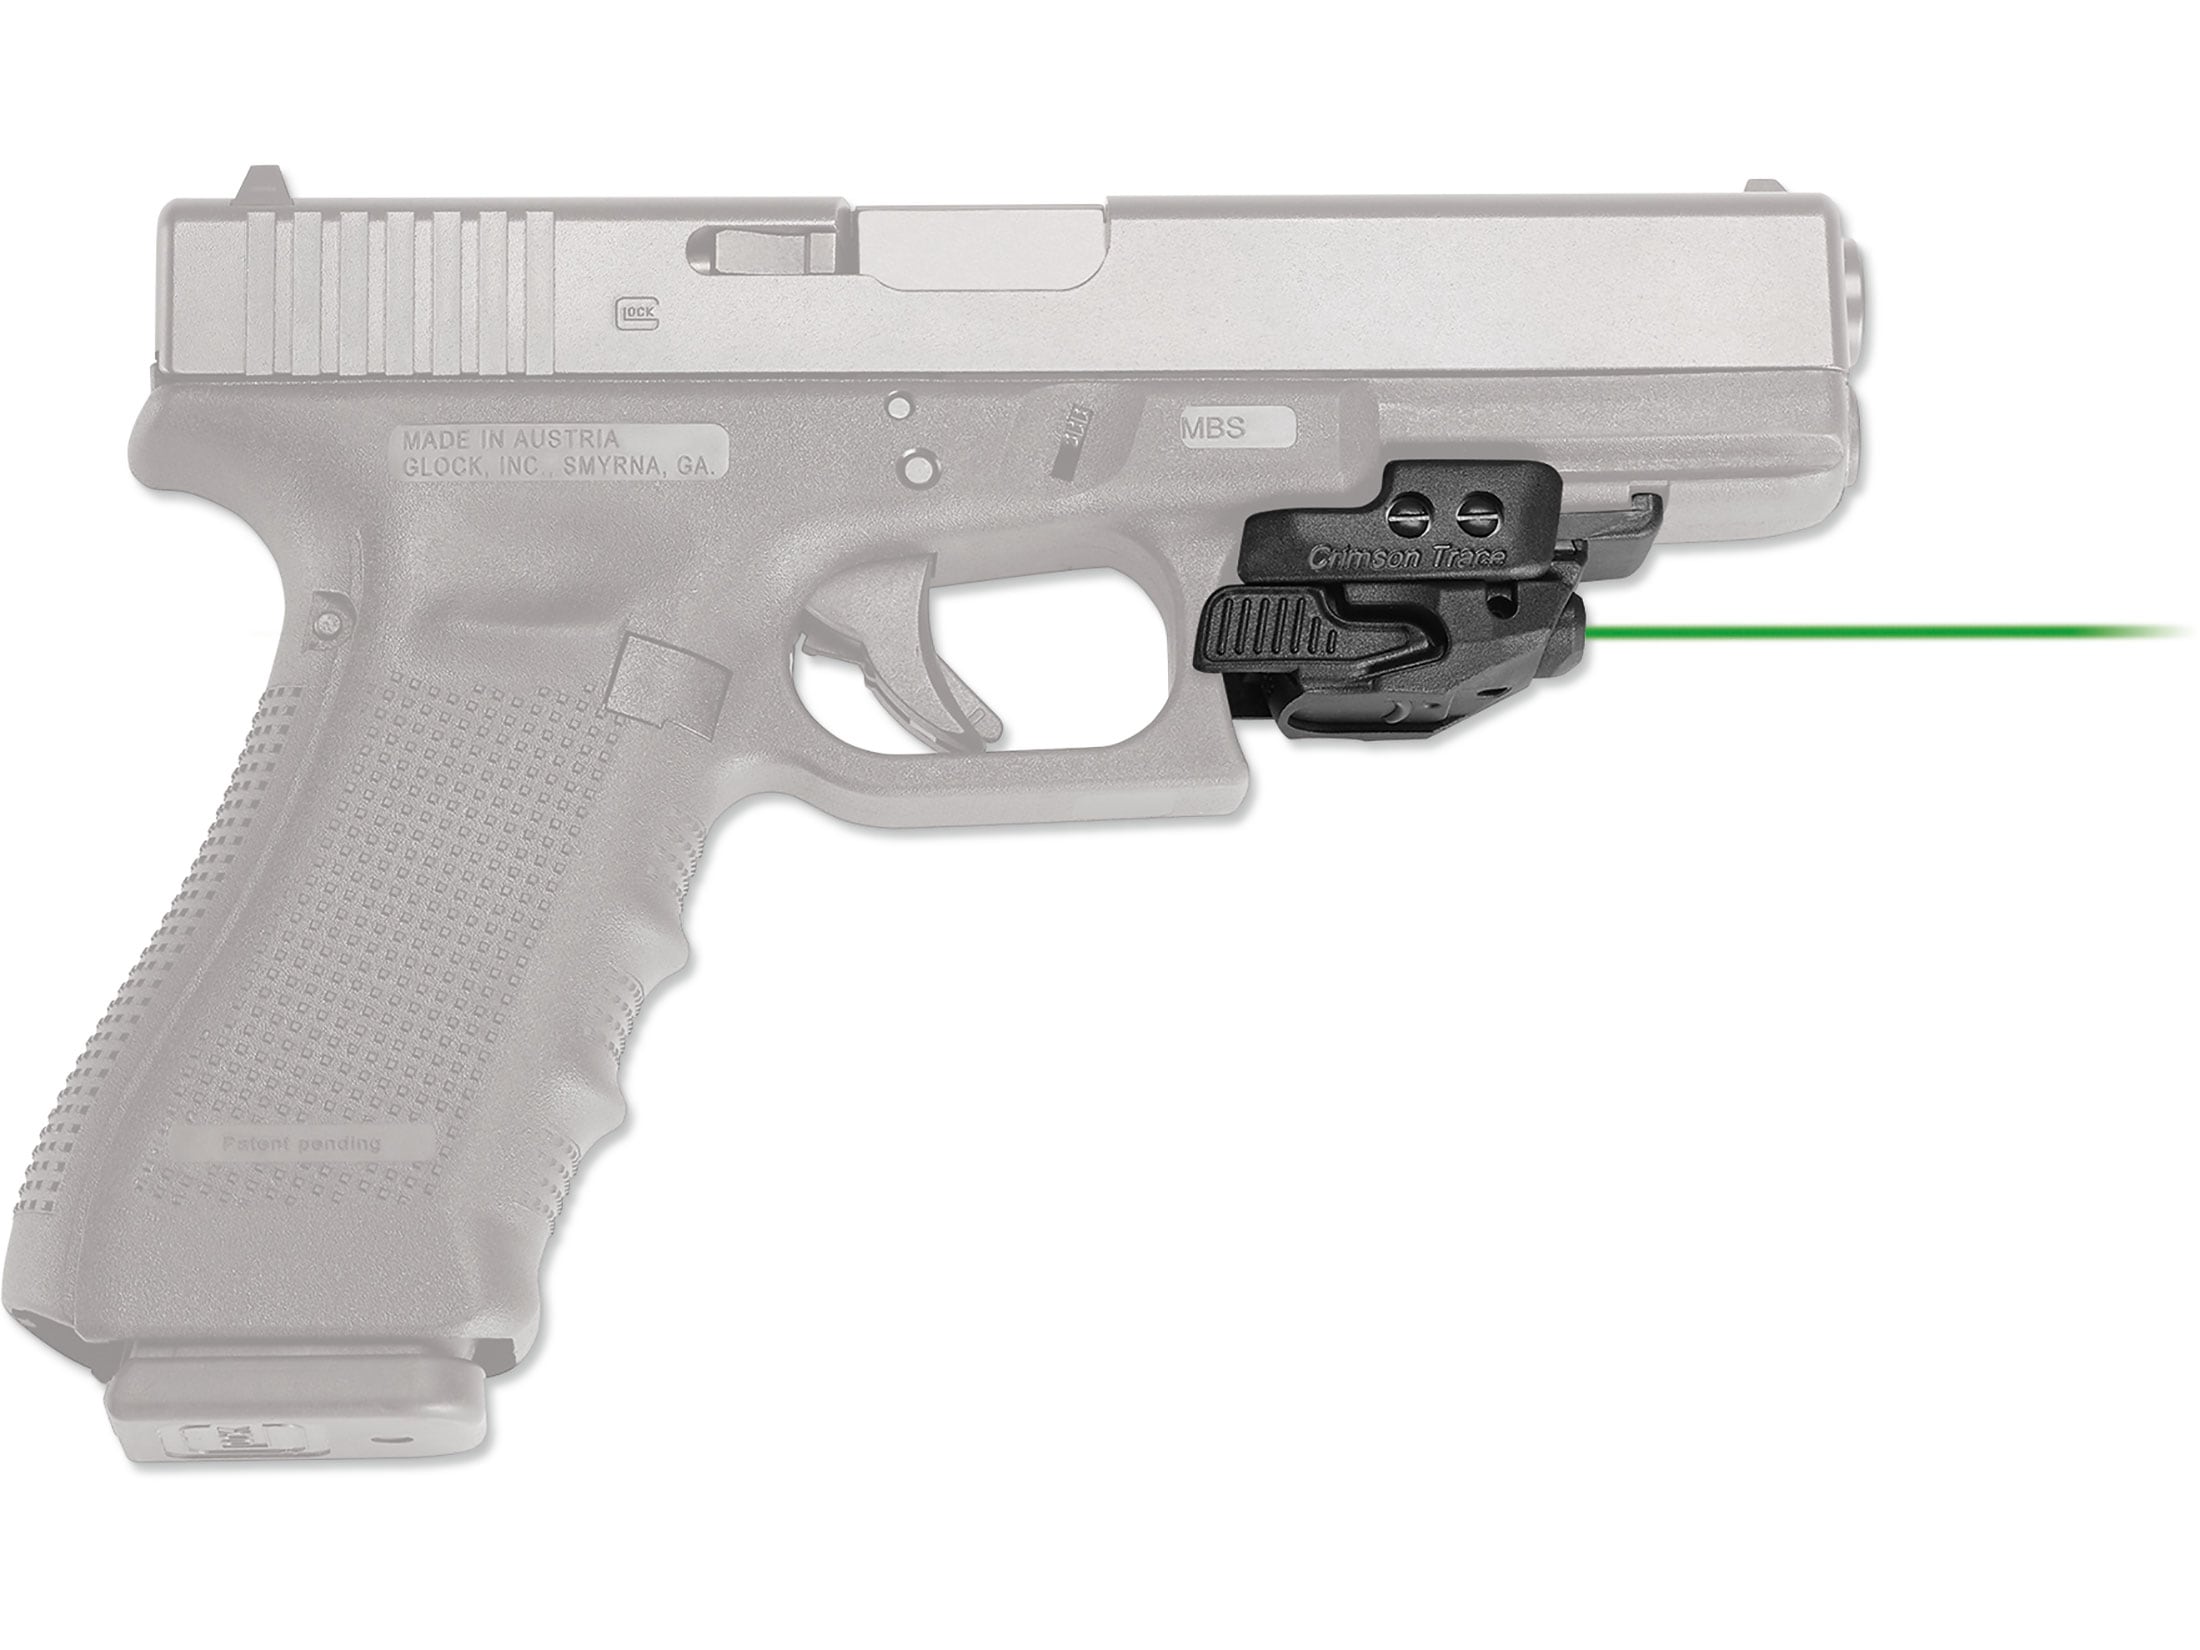 Black Polymer Tactical Mini Pistol Red Dot Laser Sight Optics For Air Gun Hunt 